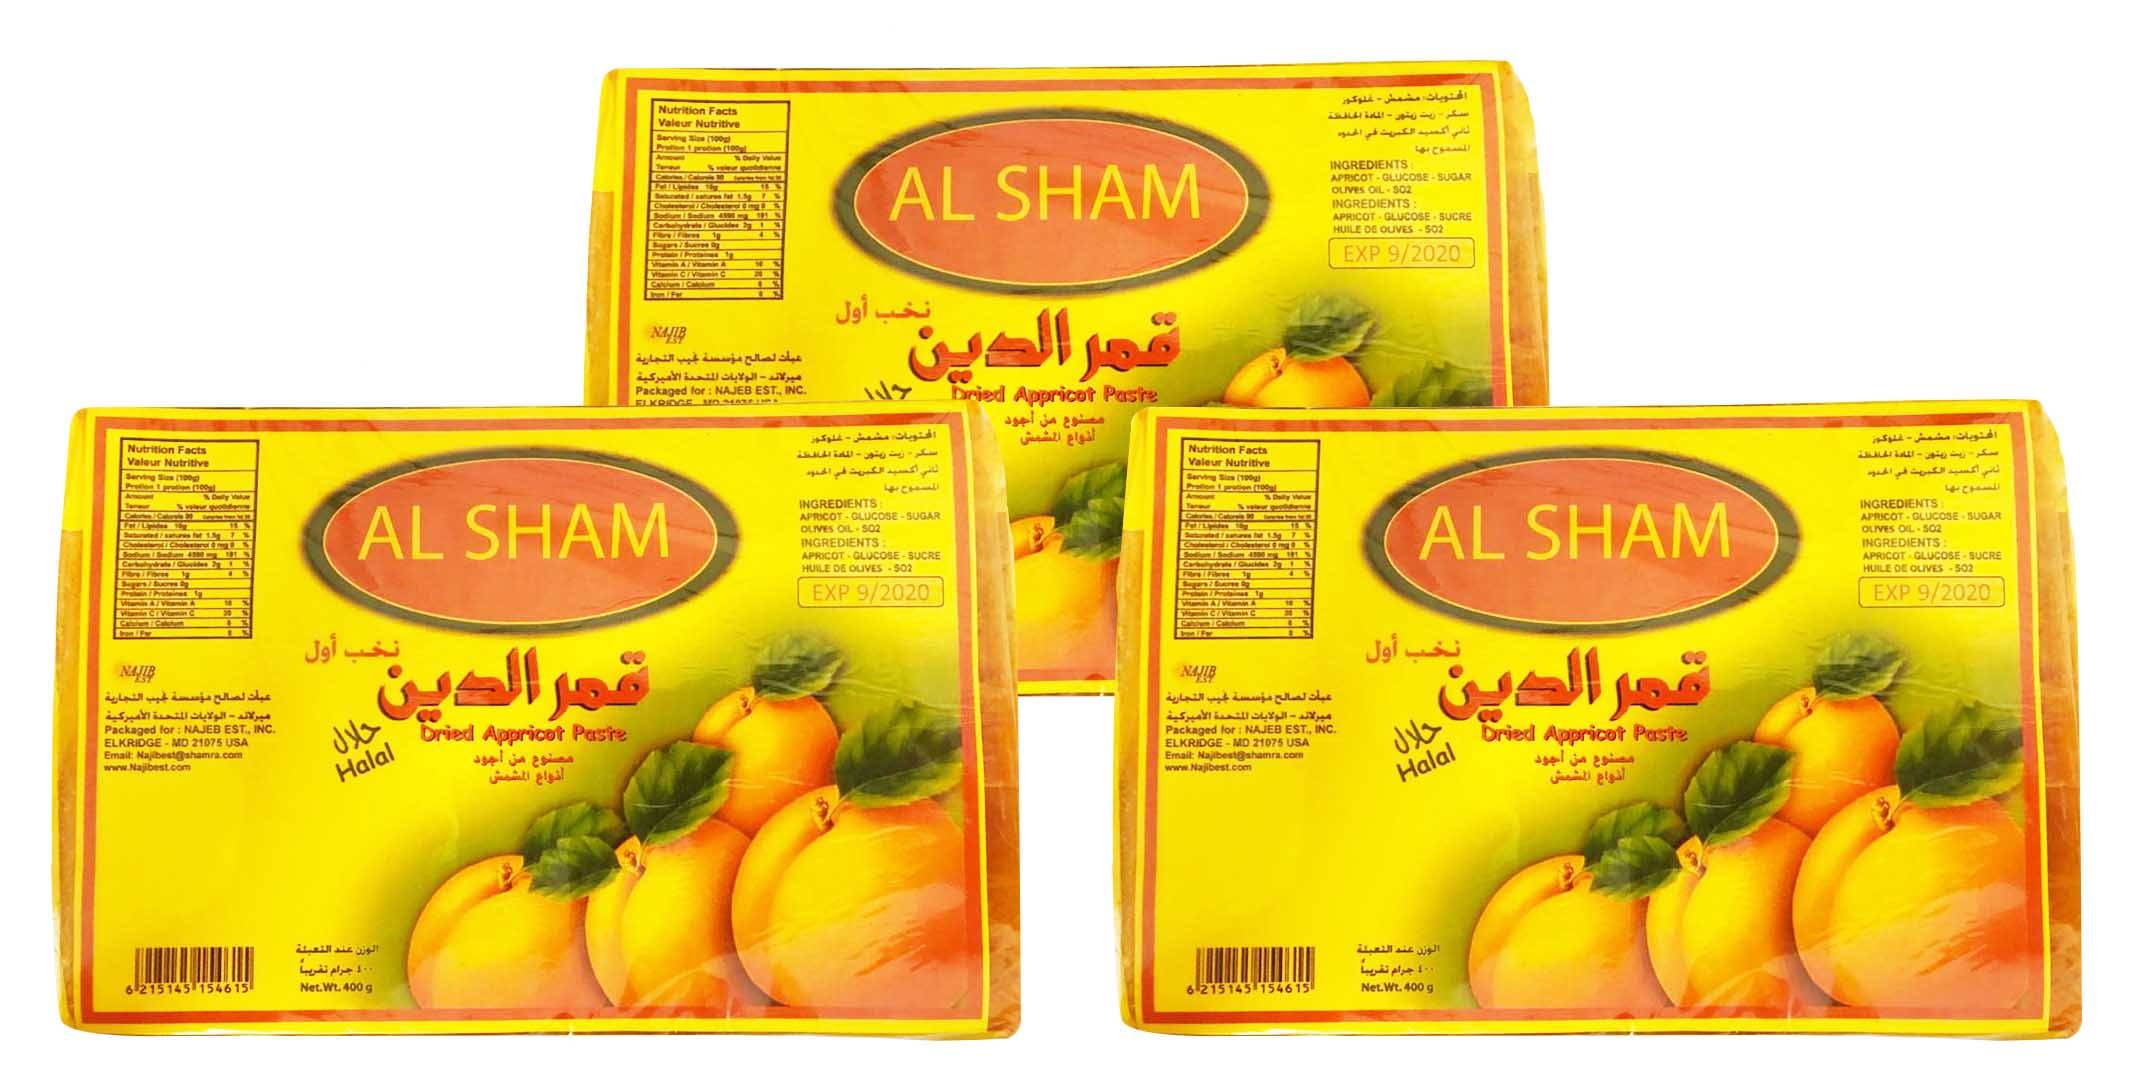 Al Sham Kamaredin Dried Apricot Paste - 400 gr. X 3 PK. 